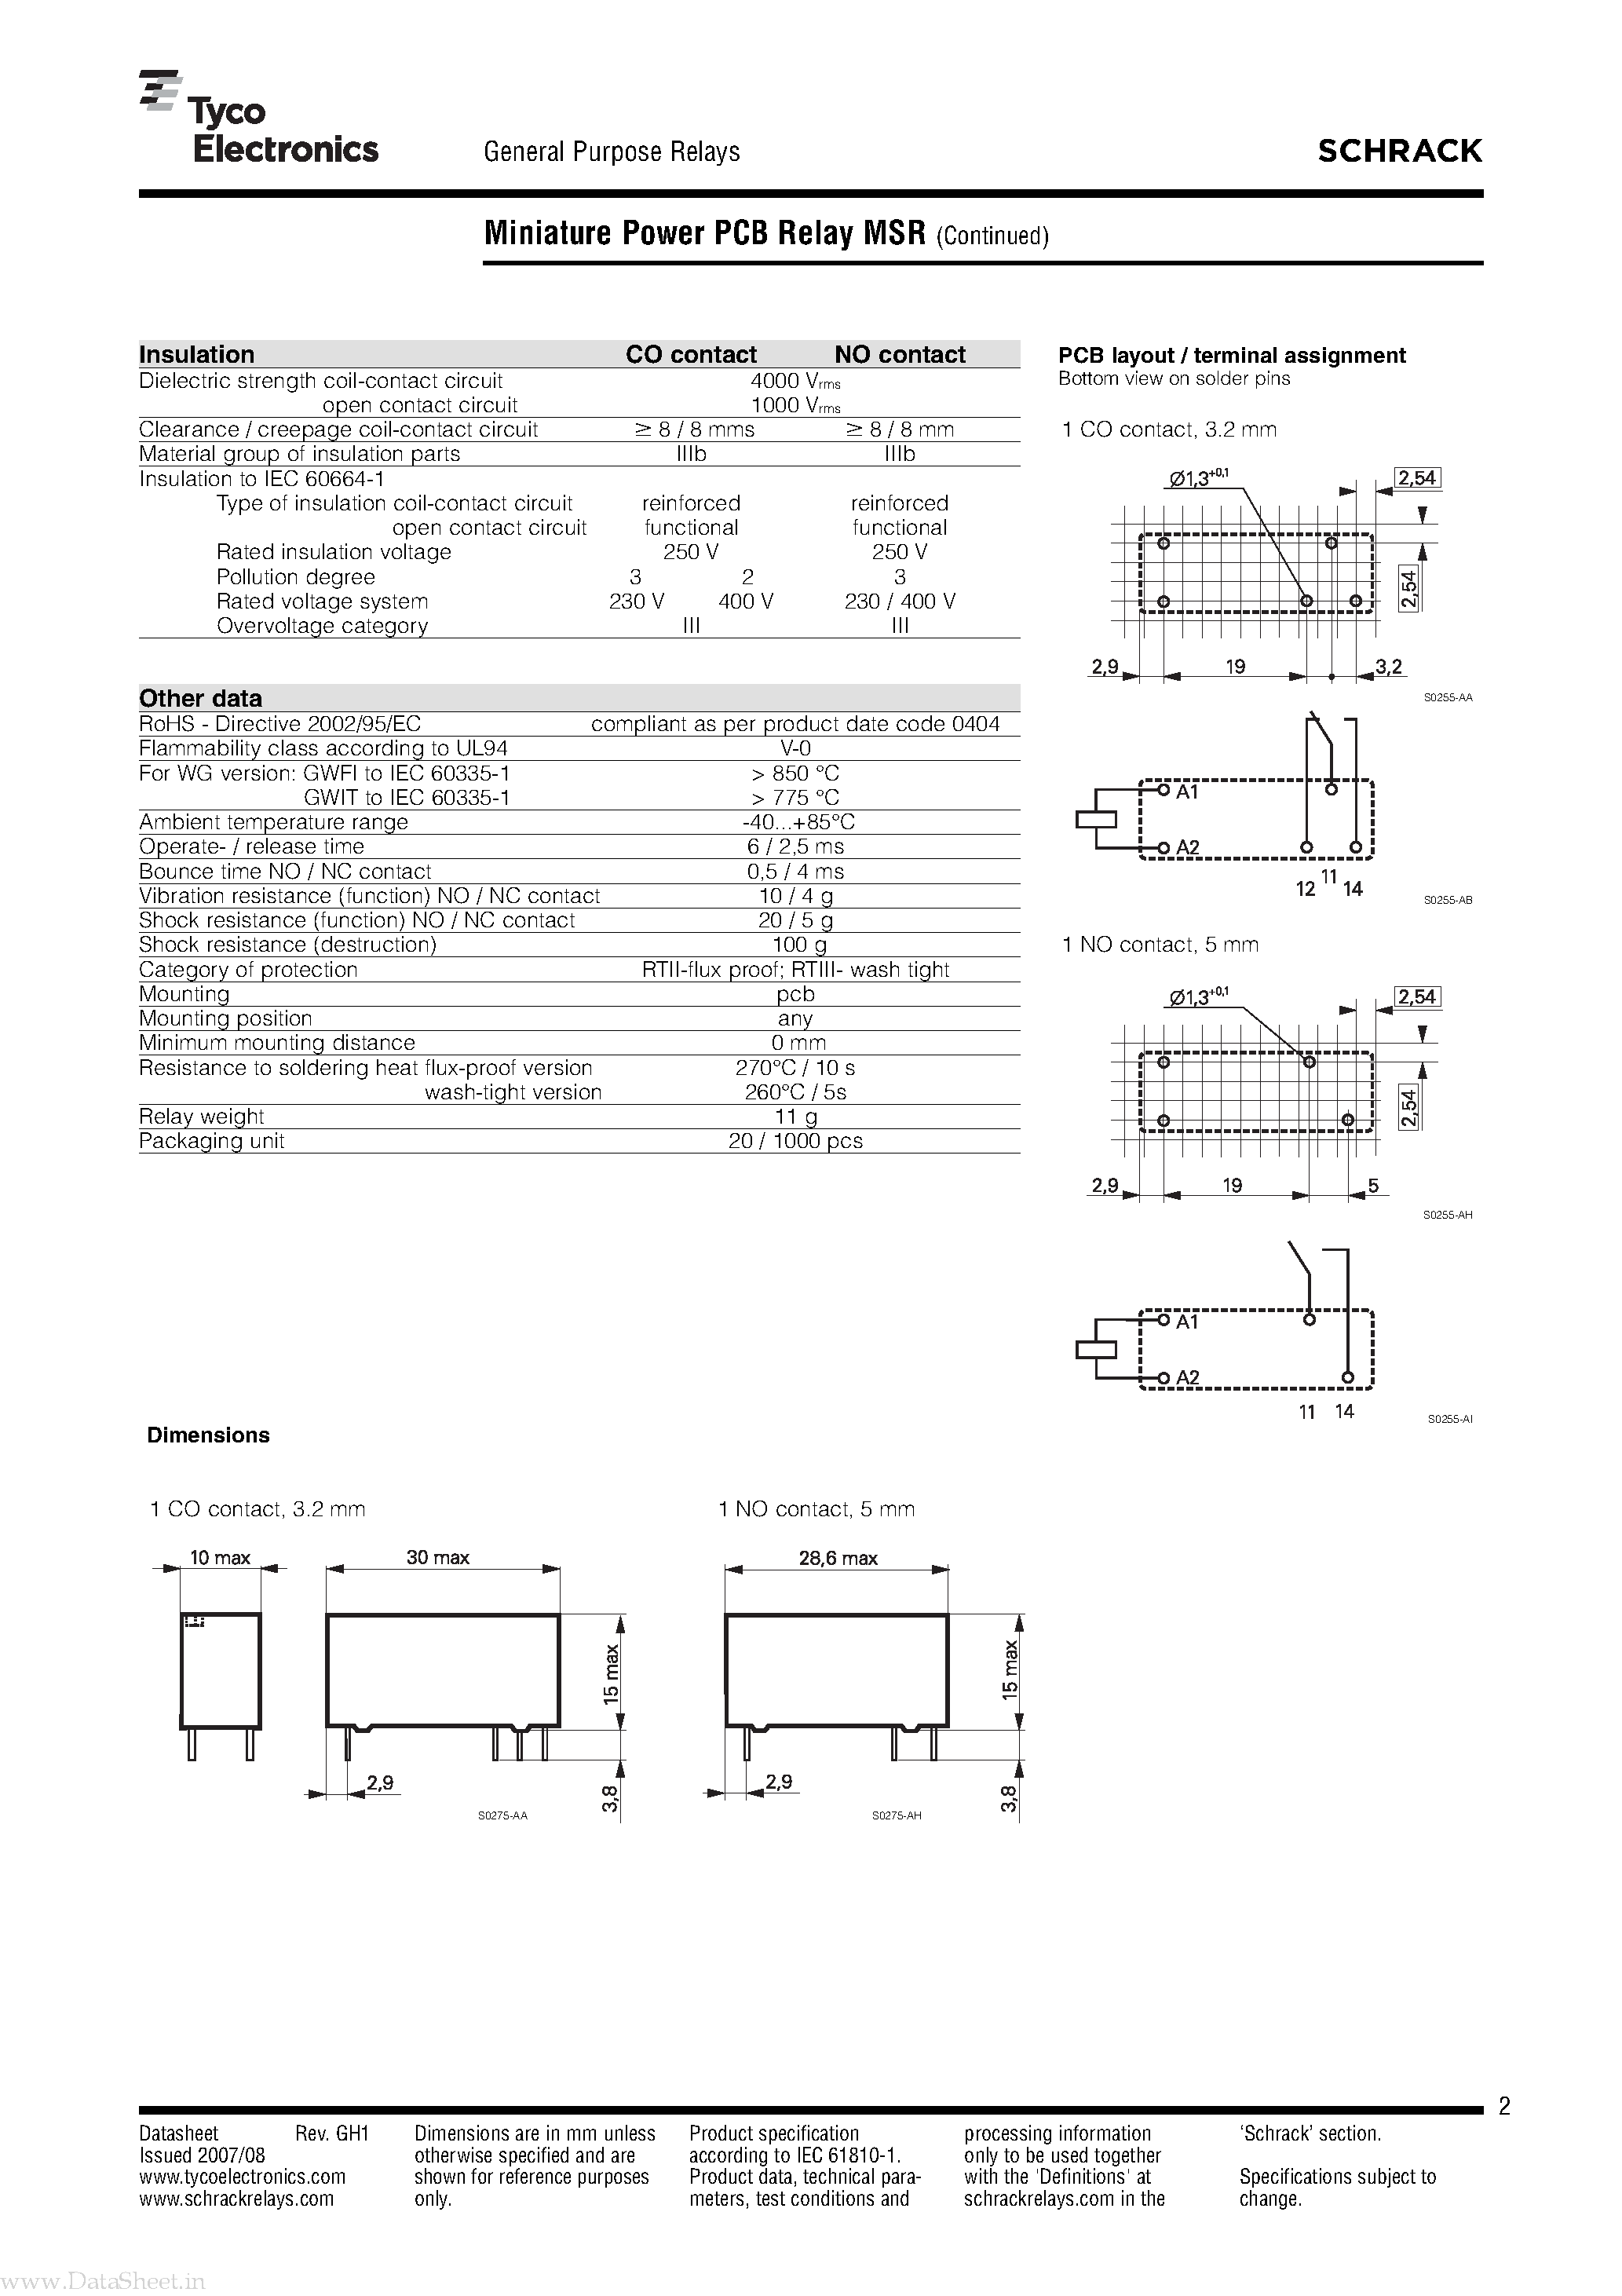 Datasheet MSR - Miniature Power PCB Relay page 2